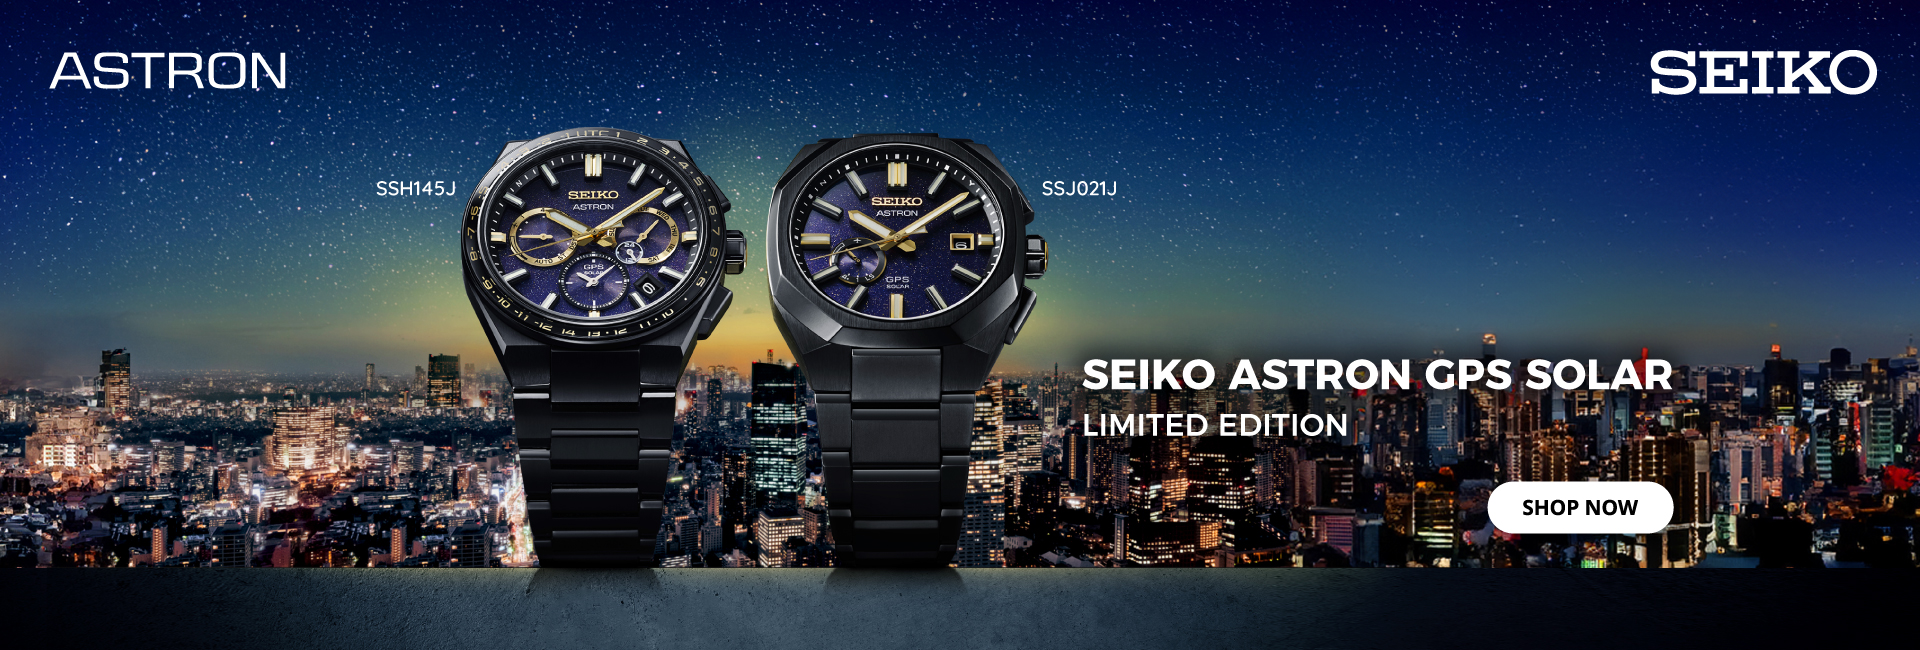 AW-Seiko-Astron-GPS-Solar-Limited-Edition-1920x650